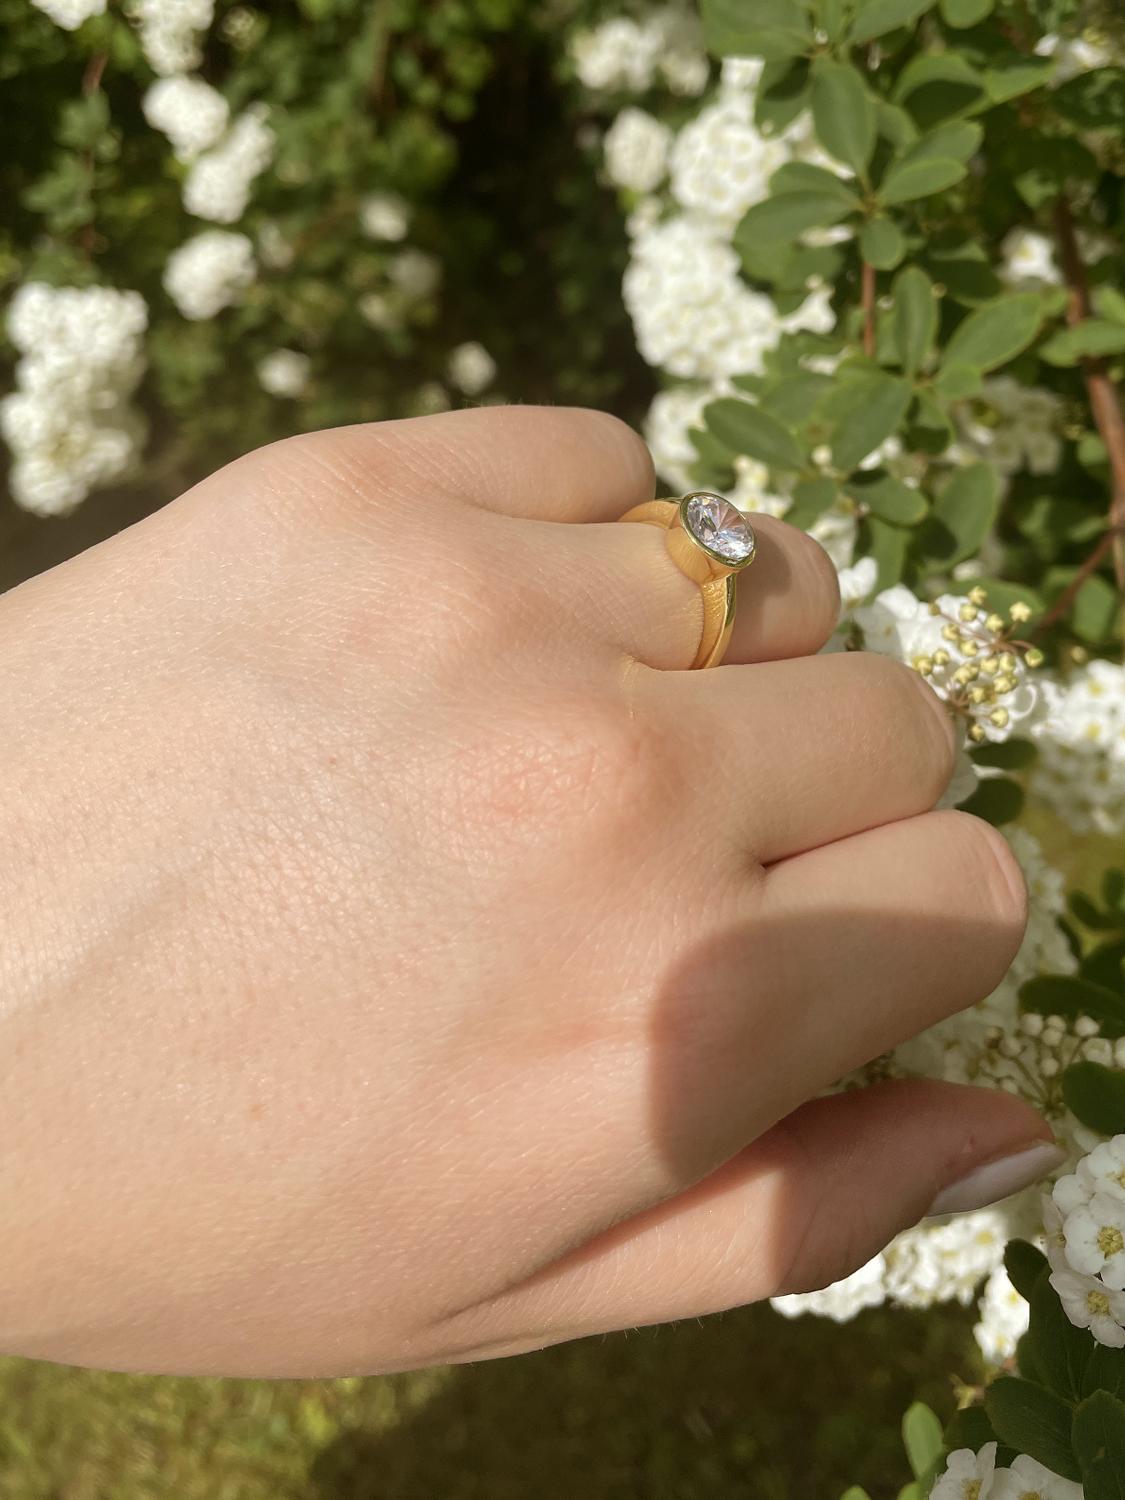 Verlobungsring aus echtem Gelbgold mit Zirkonia an Damenhand - Fascinating | Skintype